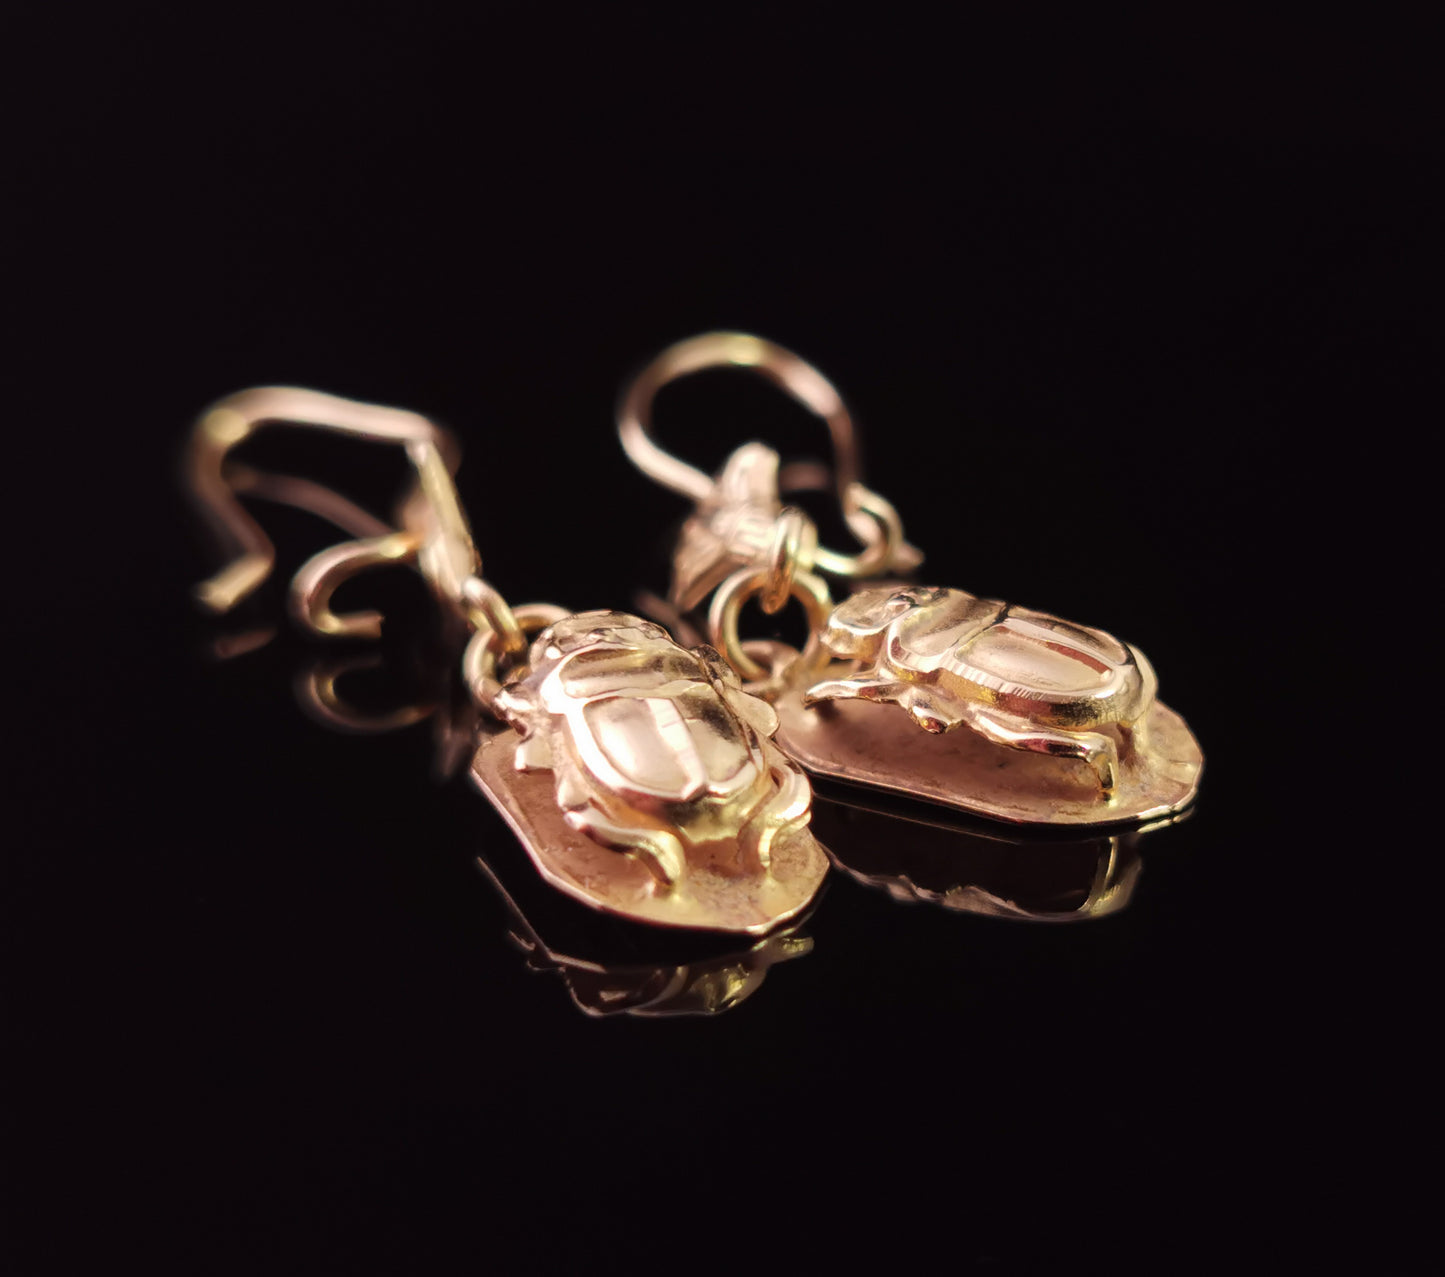 Vintage 18ct gold scarab beetle earrings, Egyptian